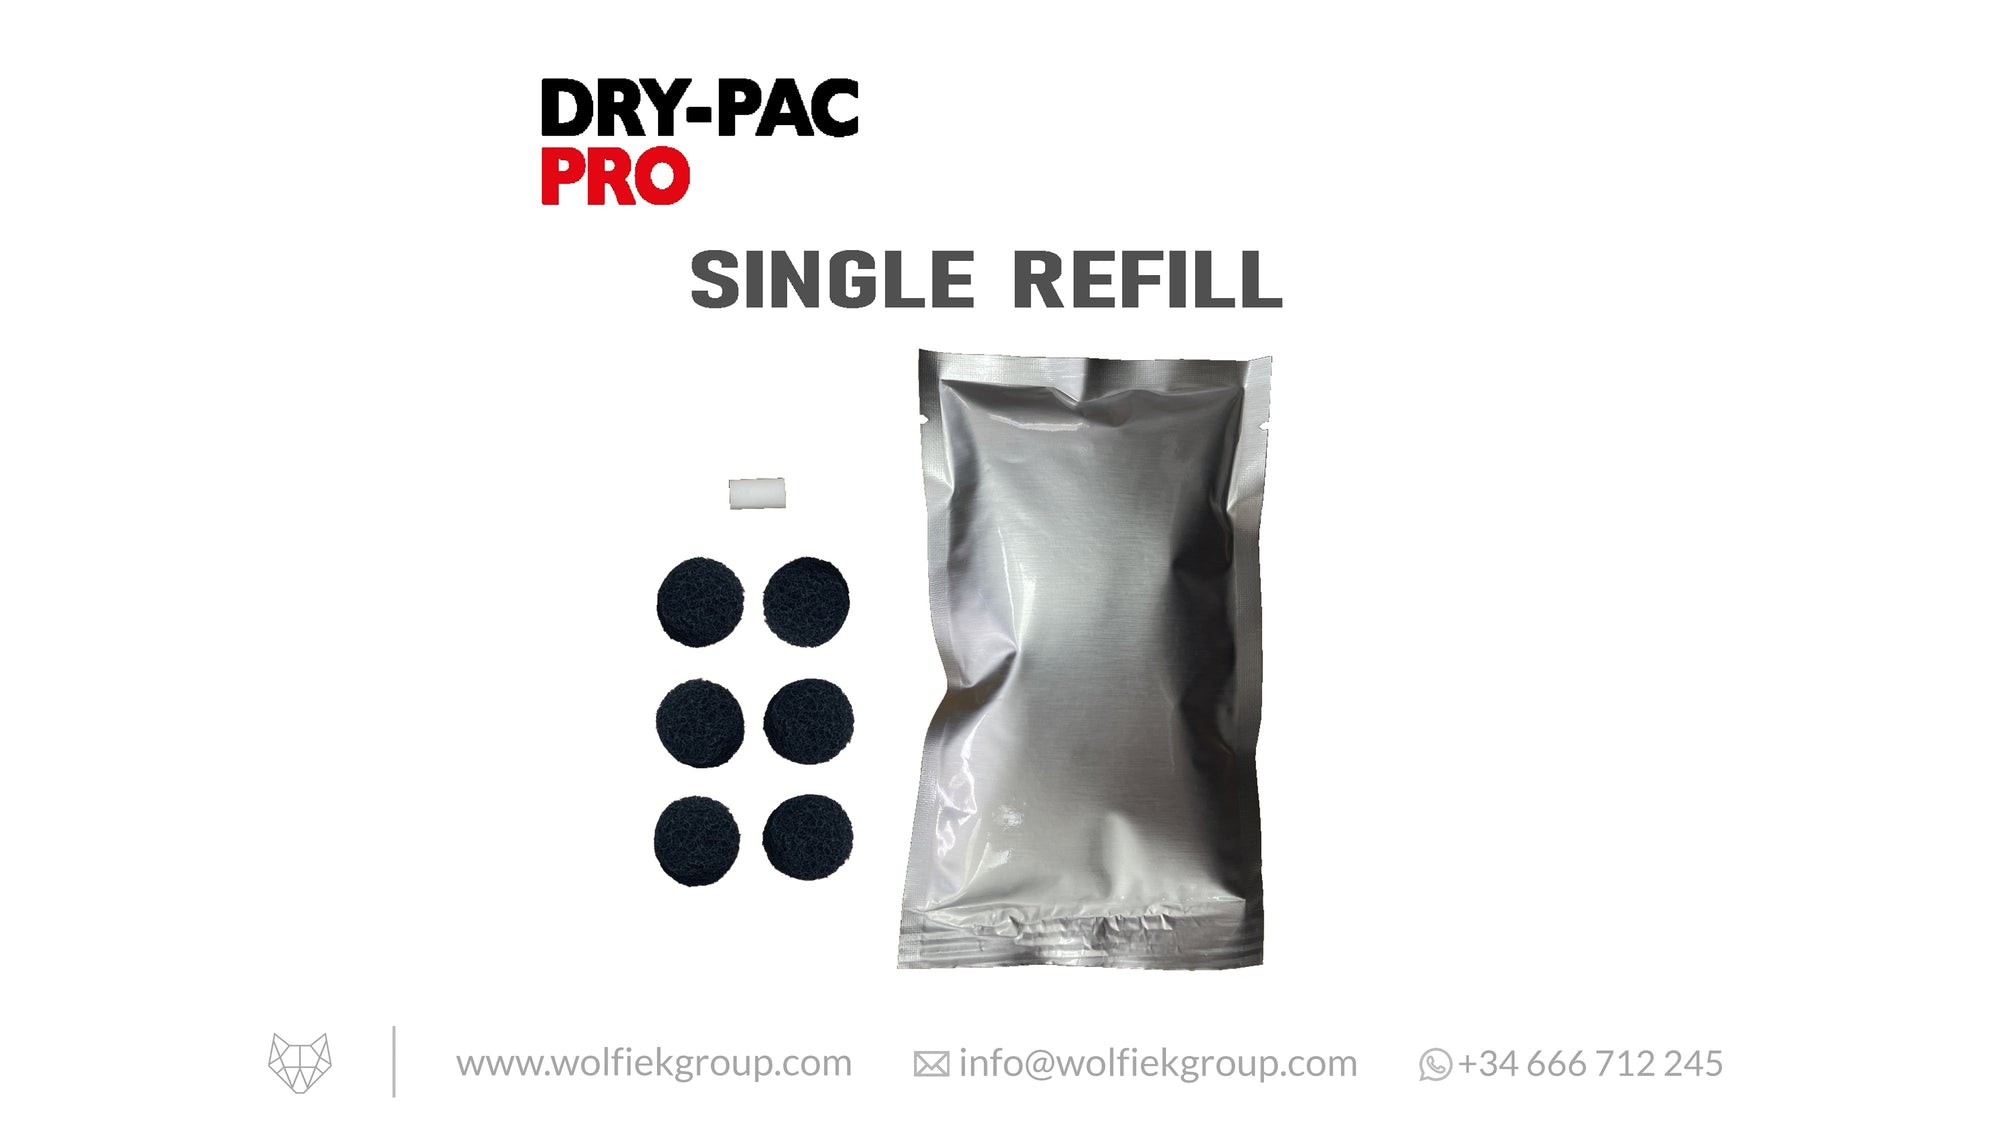 Hill EC-3000 Dry-pac Pro Refill